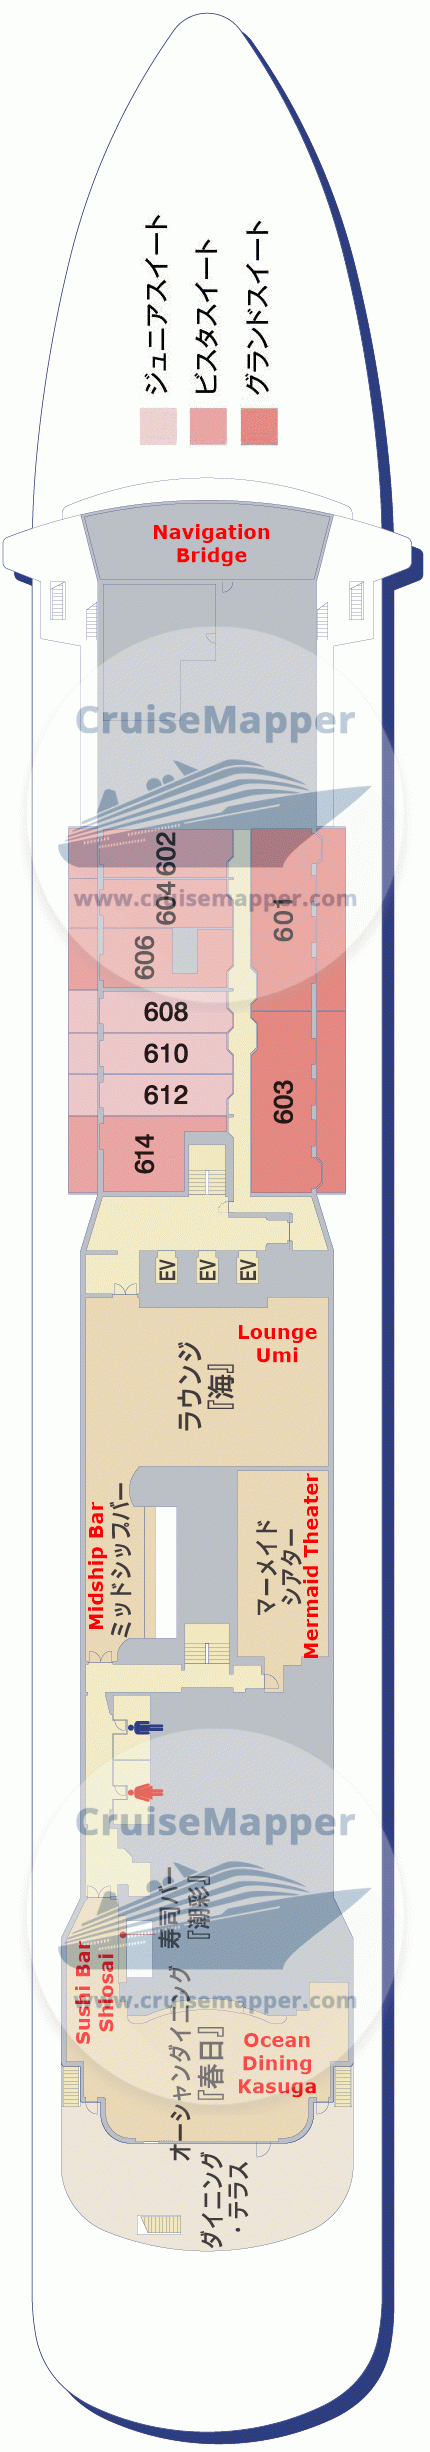 Nippon Maru Deck 06 - Suites-Lounge-Bridge